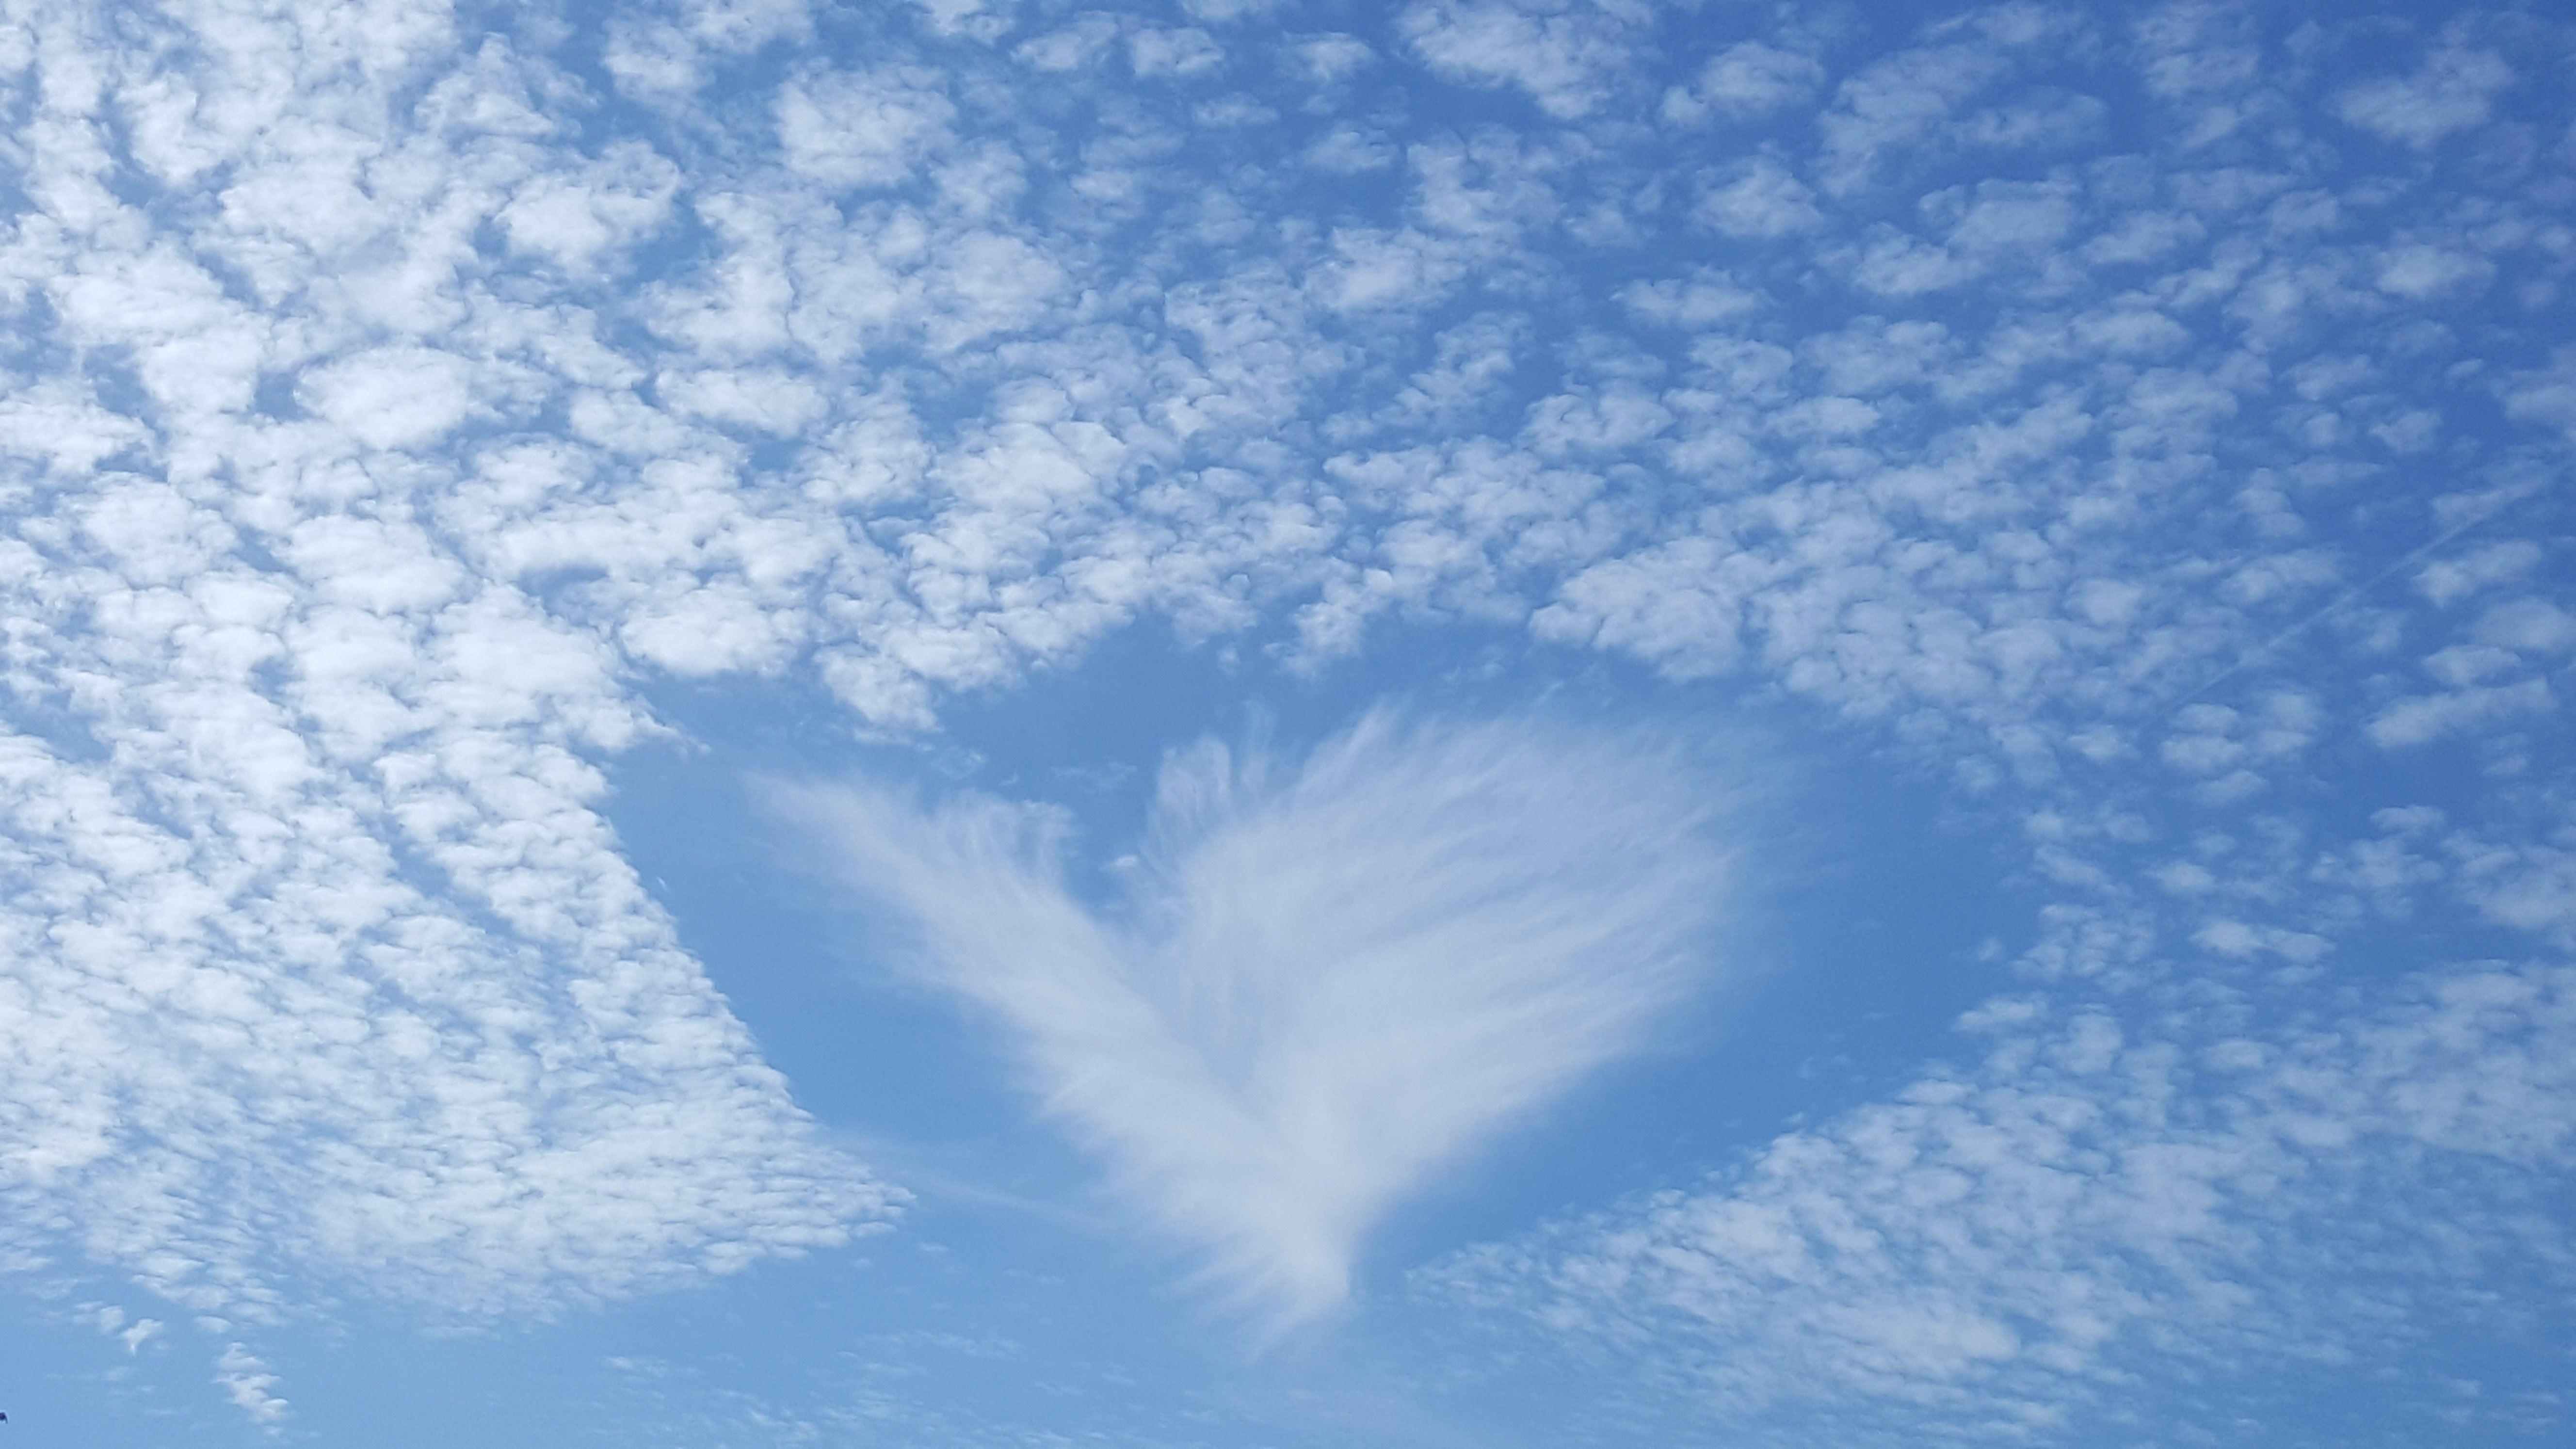 Облака руках облака качаются. Ангел в небе. Небо с облаками. Ангел на небе из облаков. Облако в форме сердца.